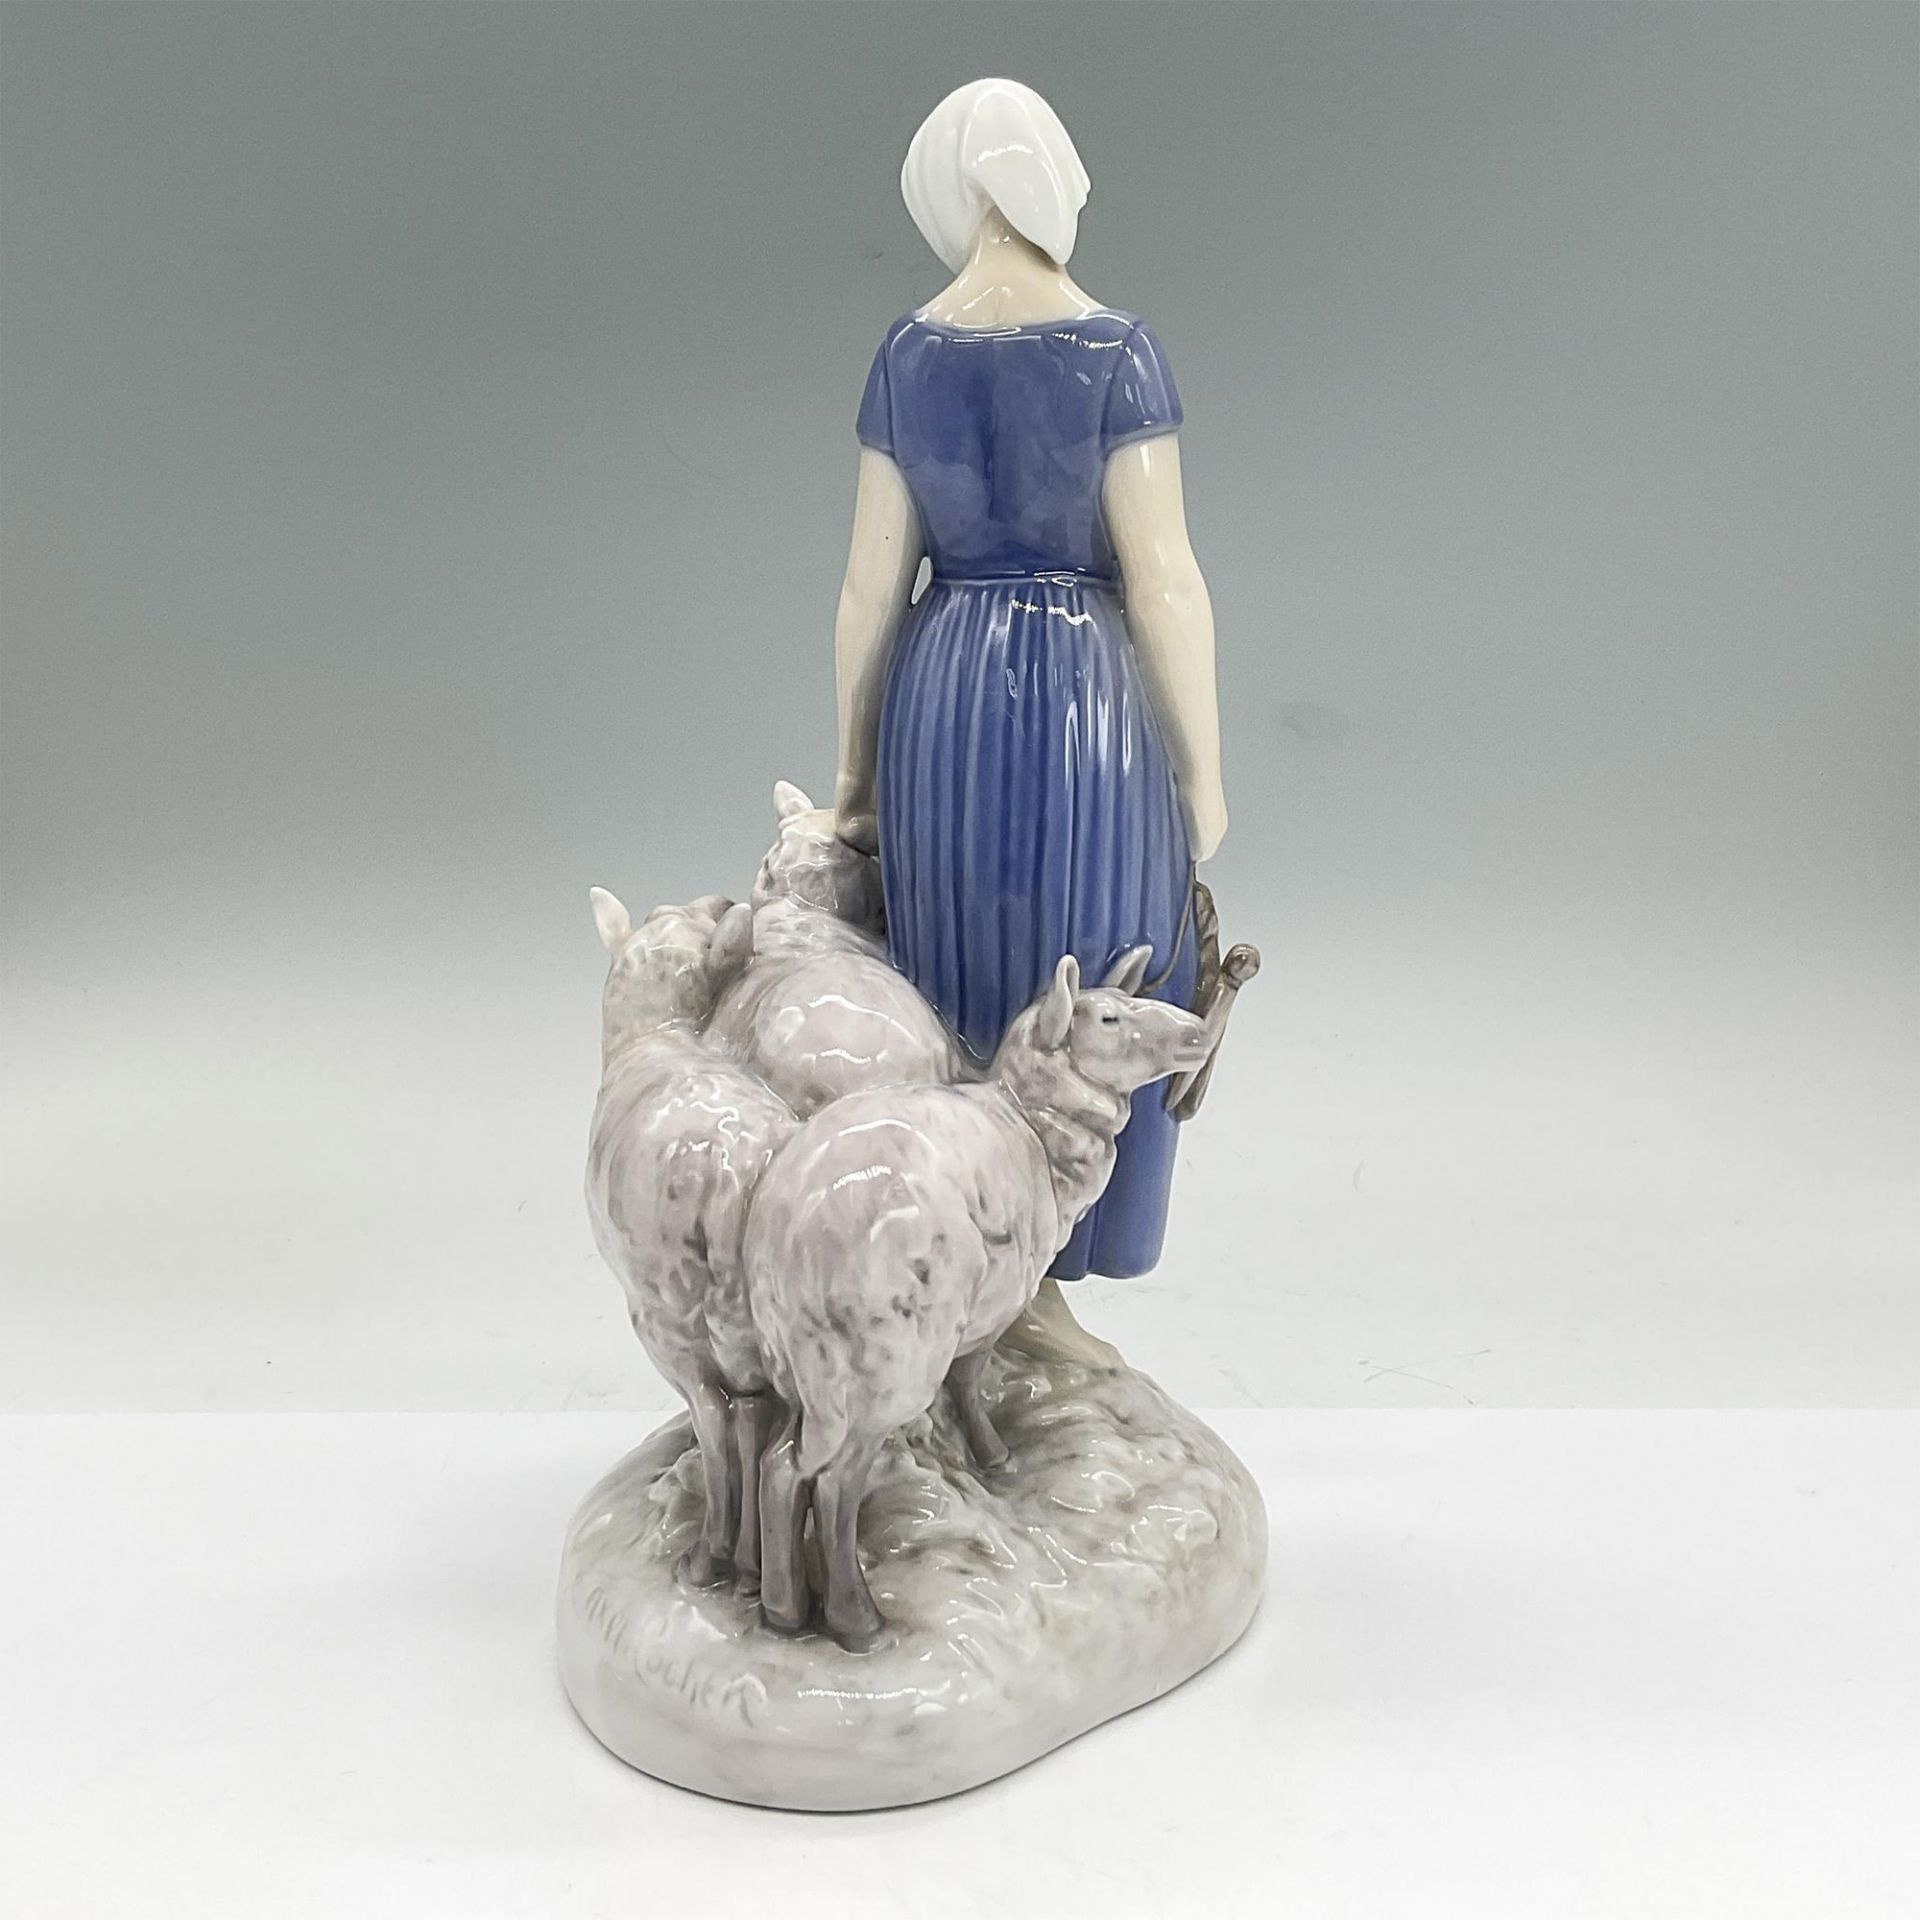 Bing & Grondahl Porcelain Figurine, Shepherdess 2010 - Image 2 of 3